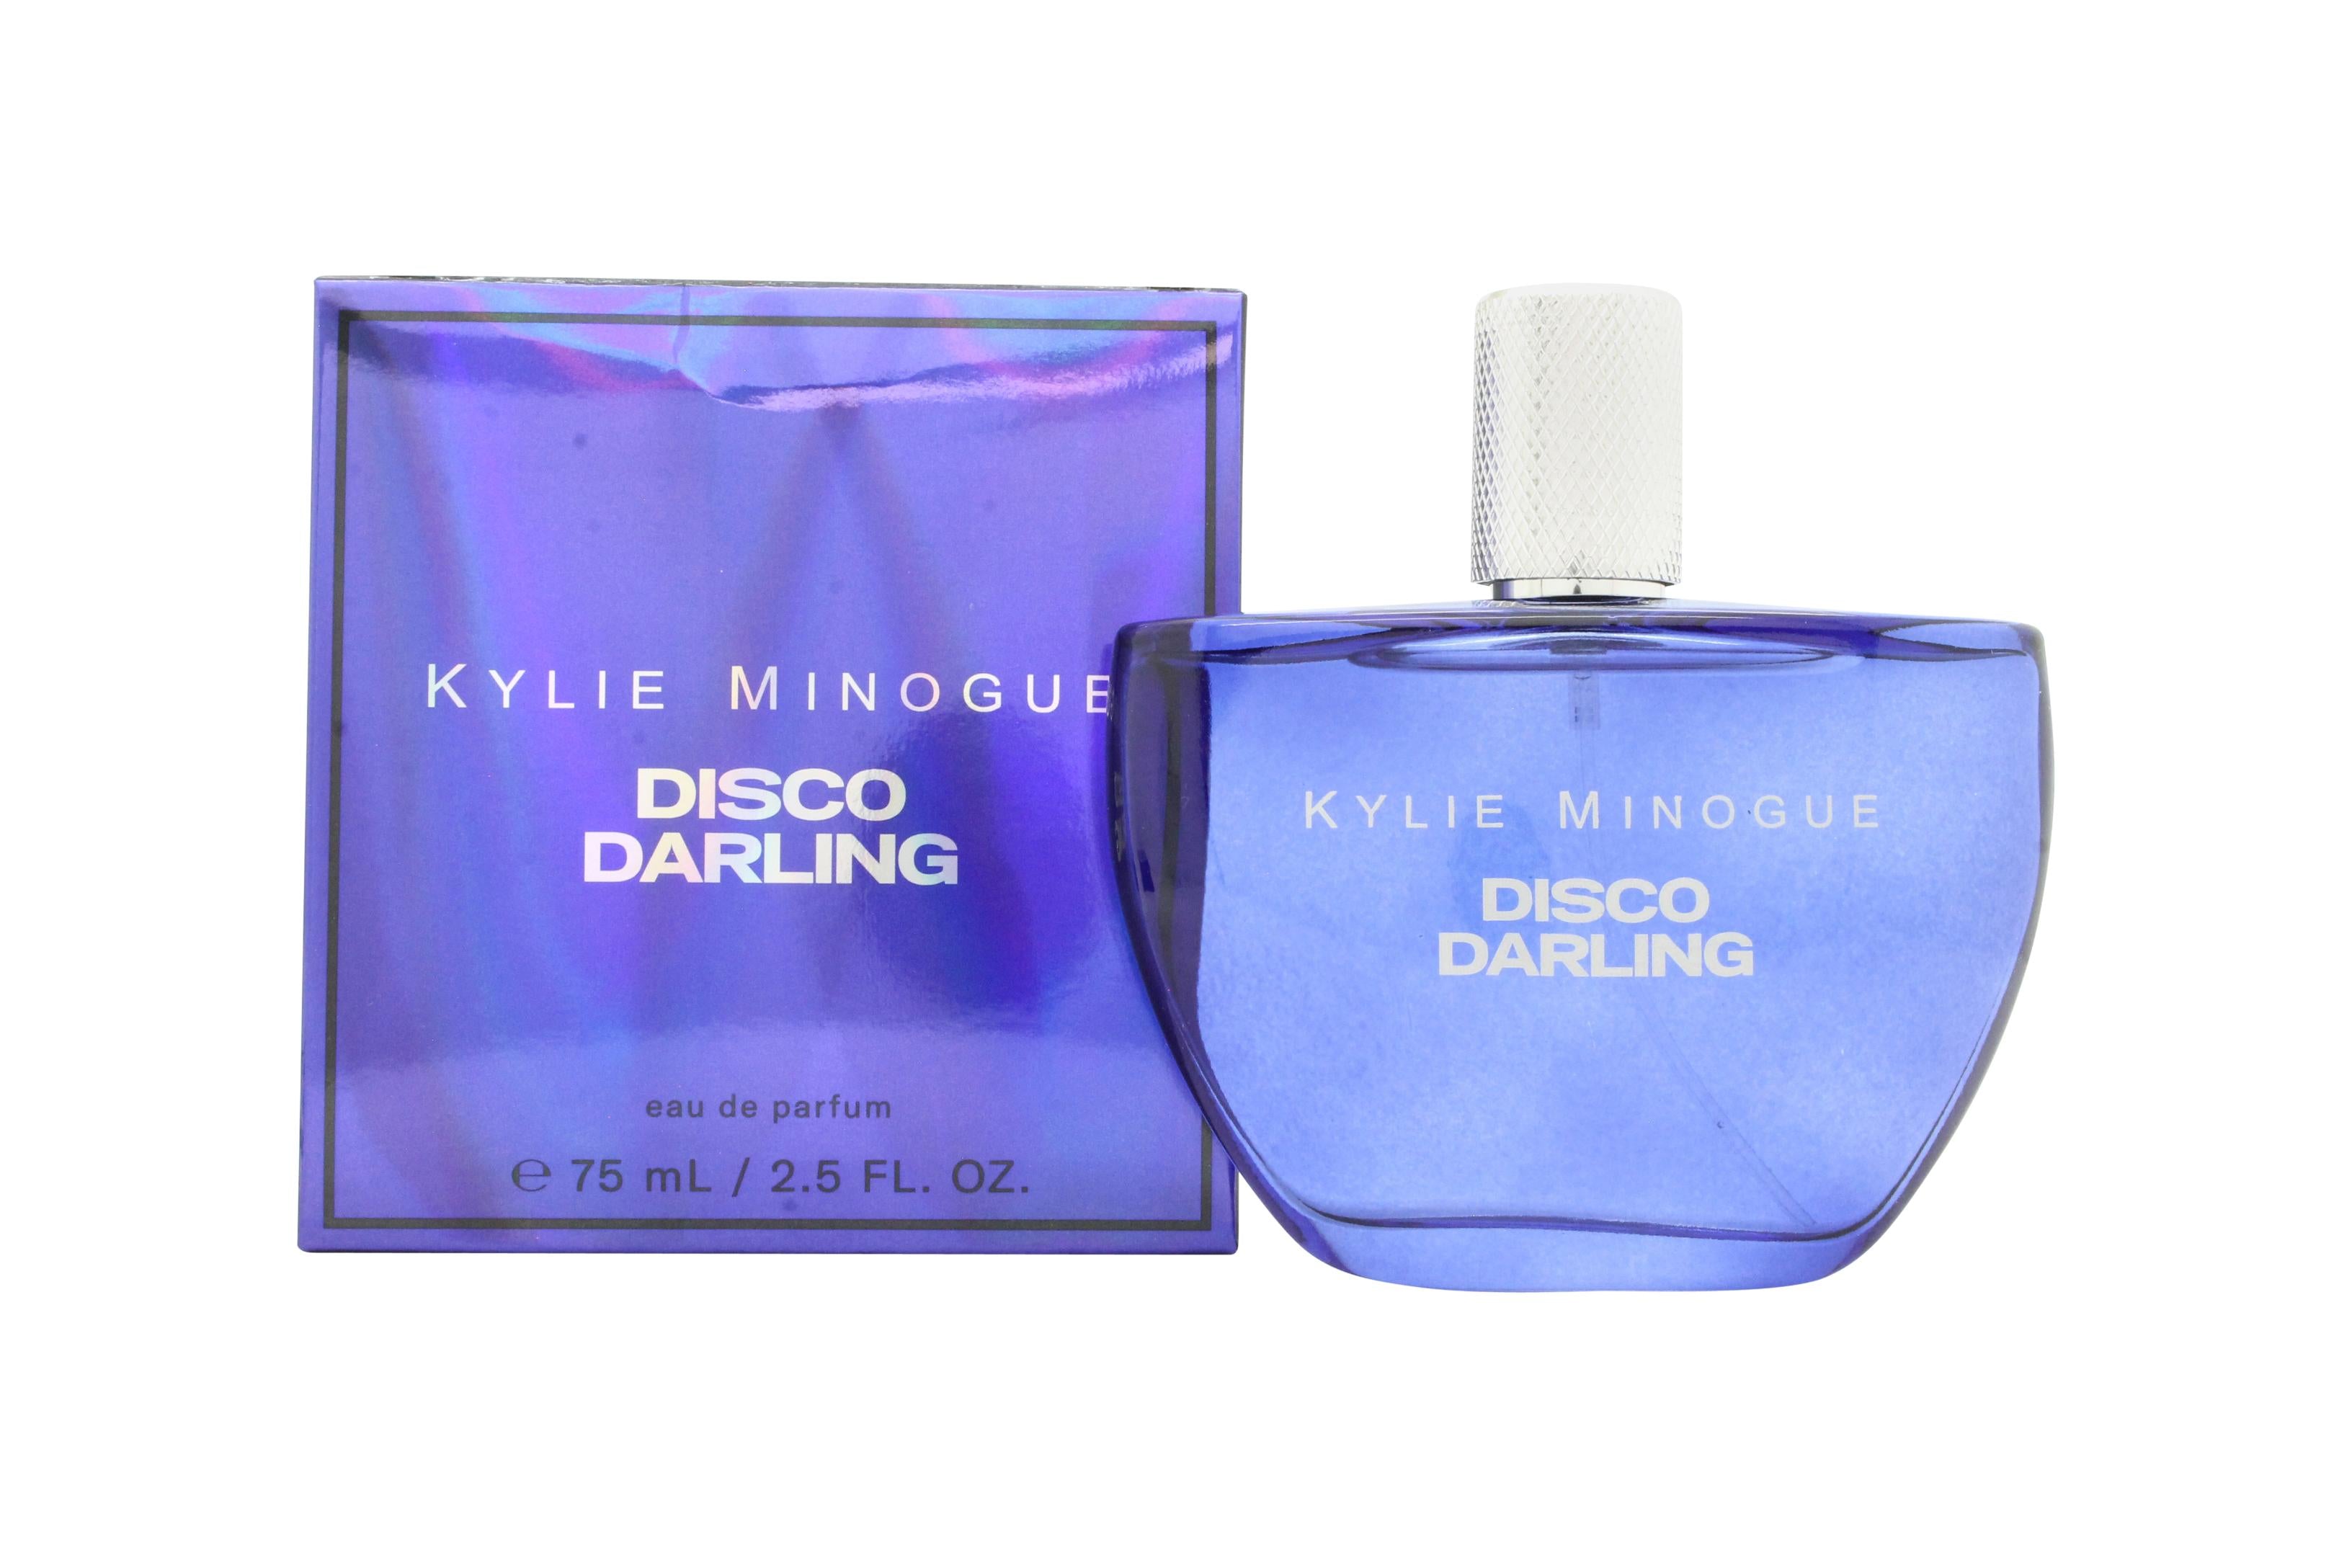 View Kylie Minogue Disco Darling Eau de Parfum 75ml Spray information